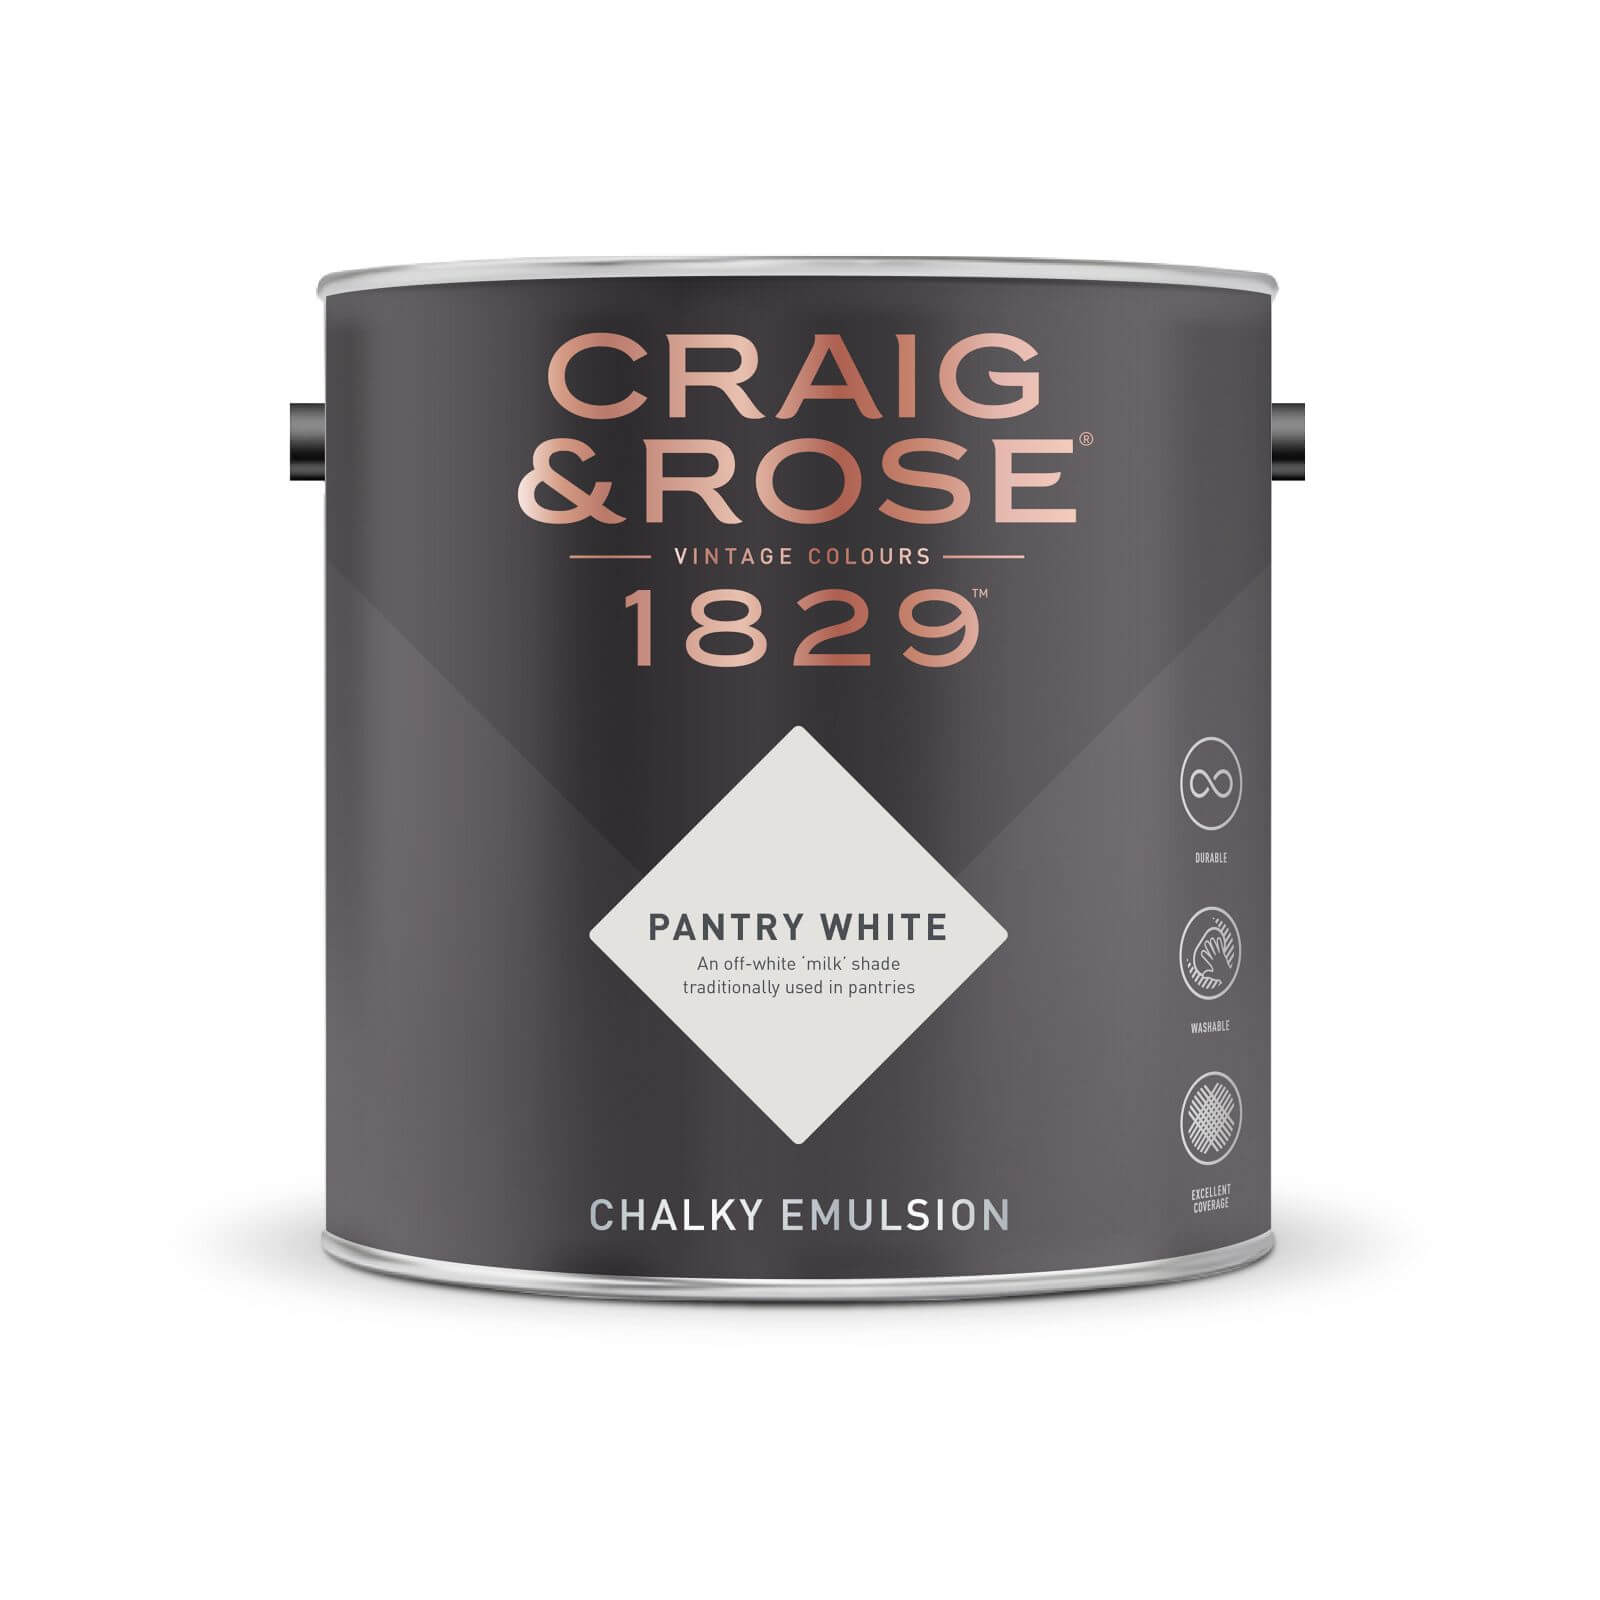 Craig & Rose 1829 Chalky Emulsion Paint Pantry White - Tester 50ml